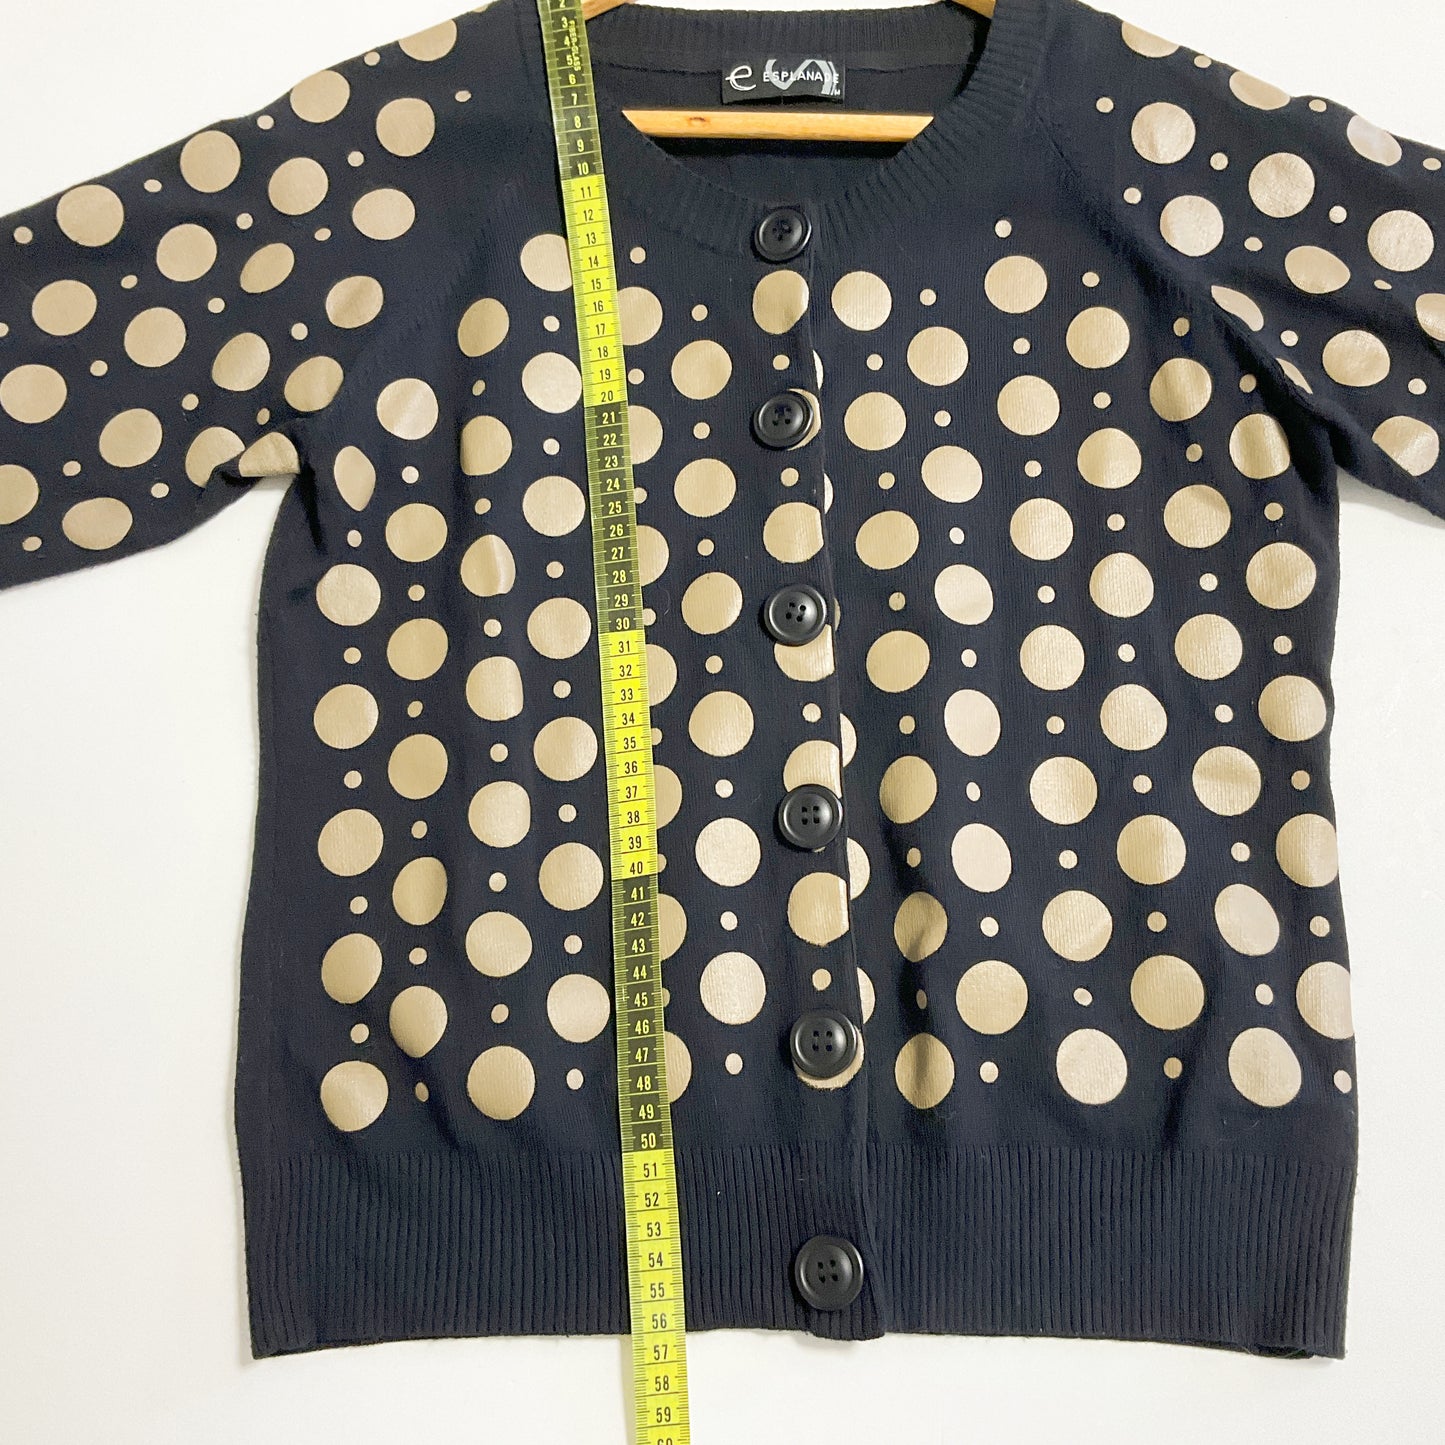 Esplanade - Black Short-sleeved Knitted Top with Golden Polka Dot Pattern